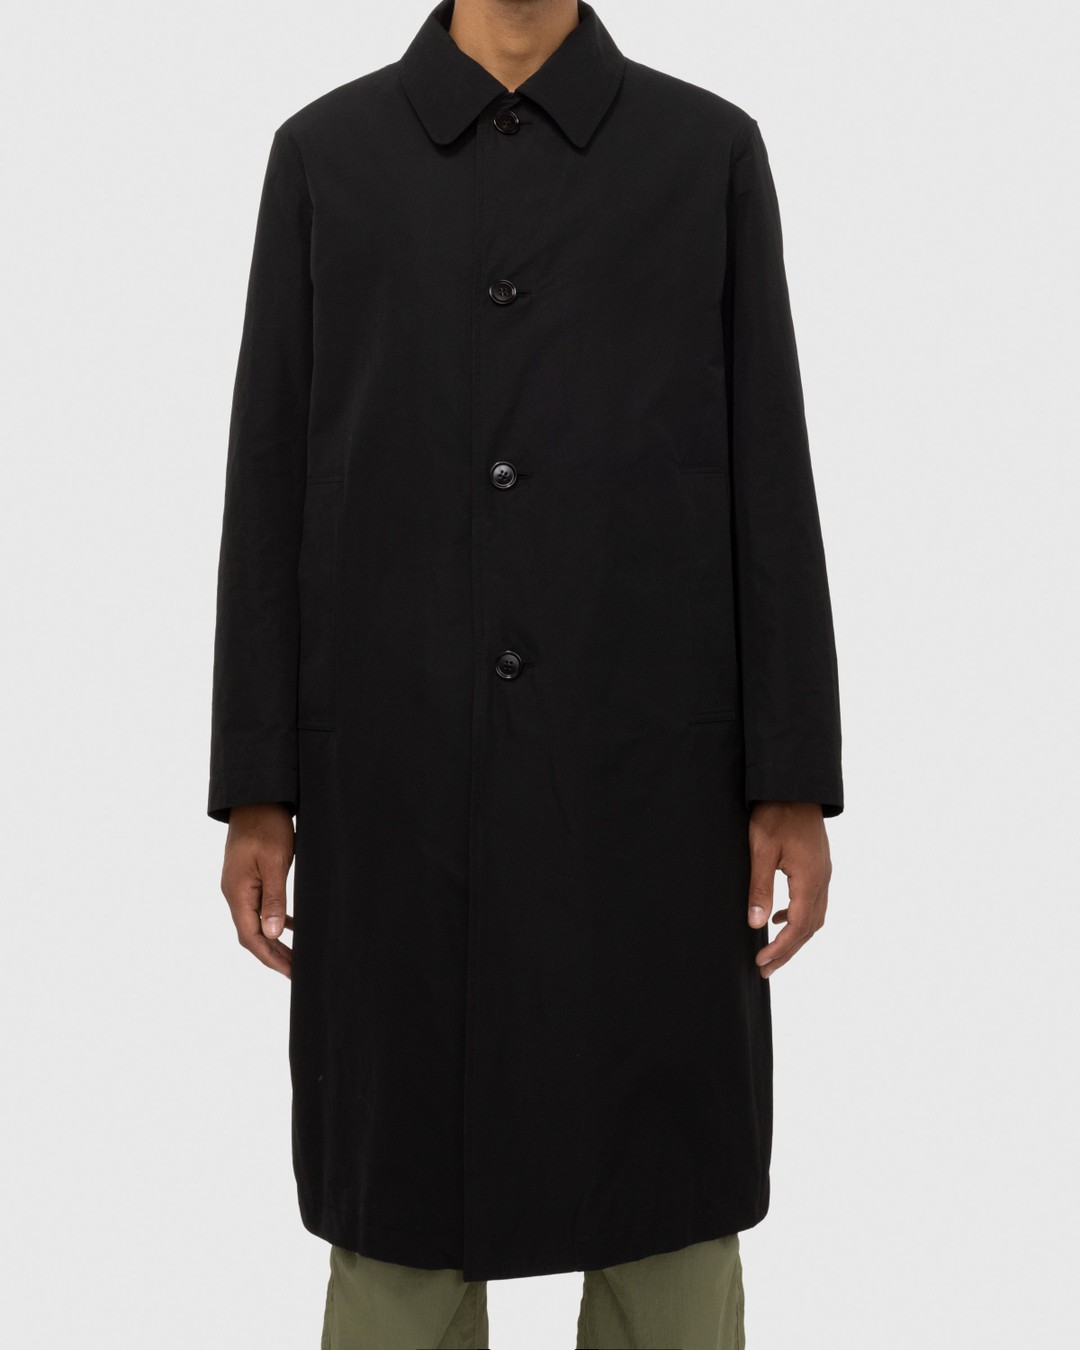 Dries van Noten – Rankle Coat Black - Outerwear - Black - Image 4